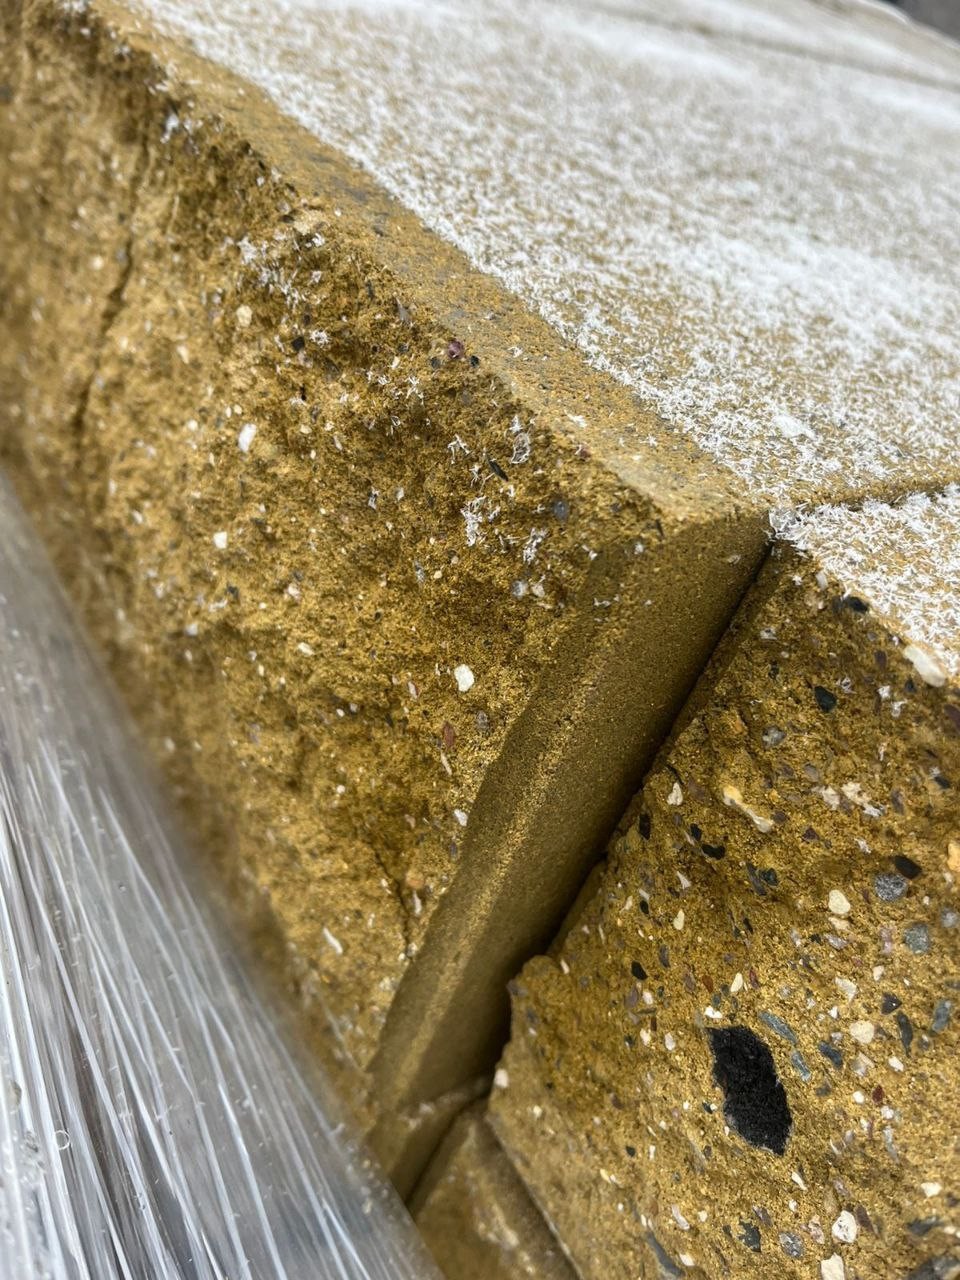 Блок бетон угловой декоративный (колотый) 390*195*182мм, желтый - фото - 1